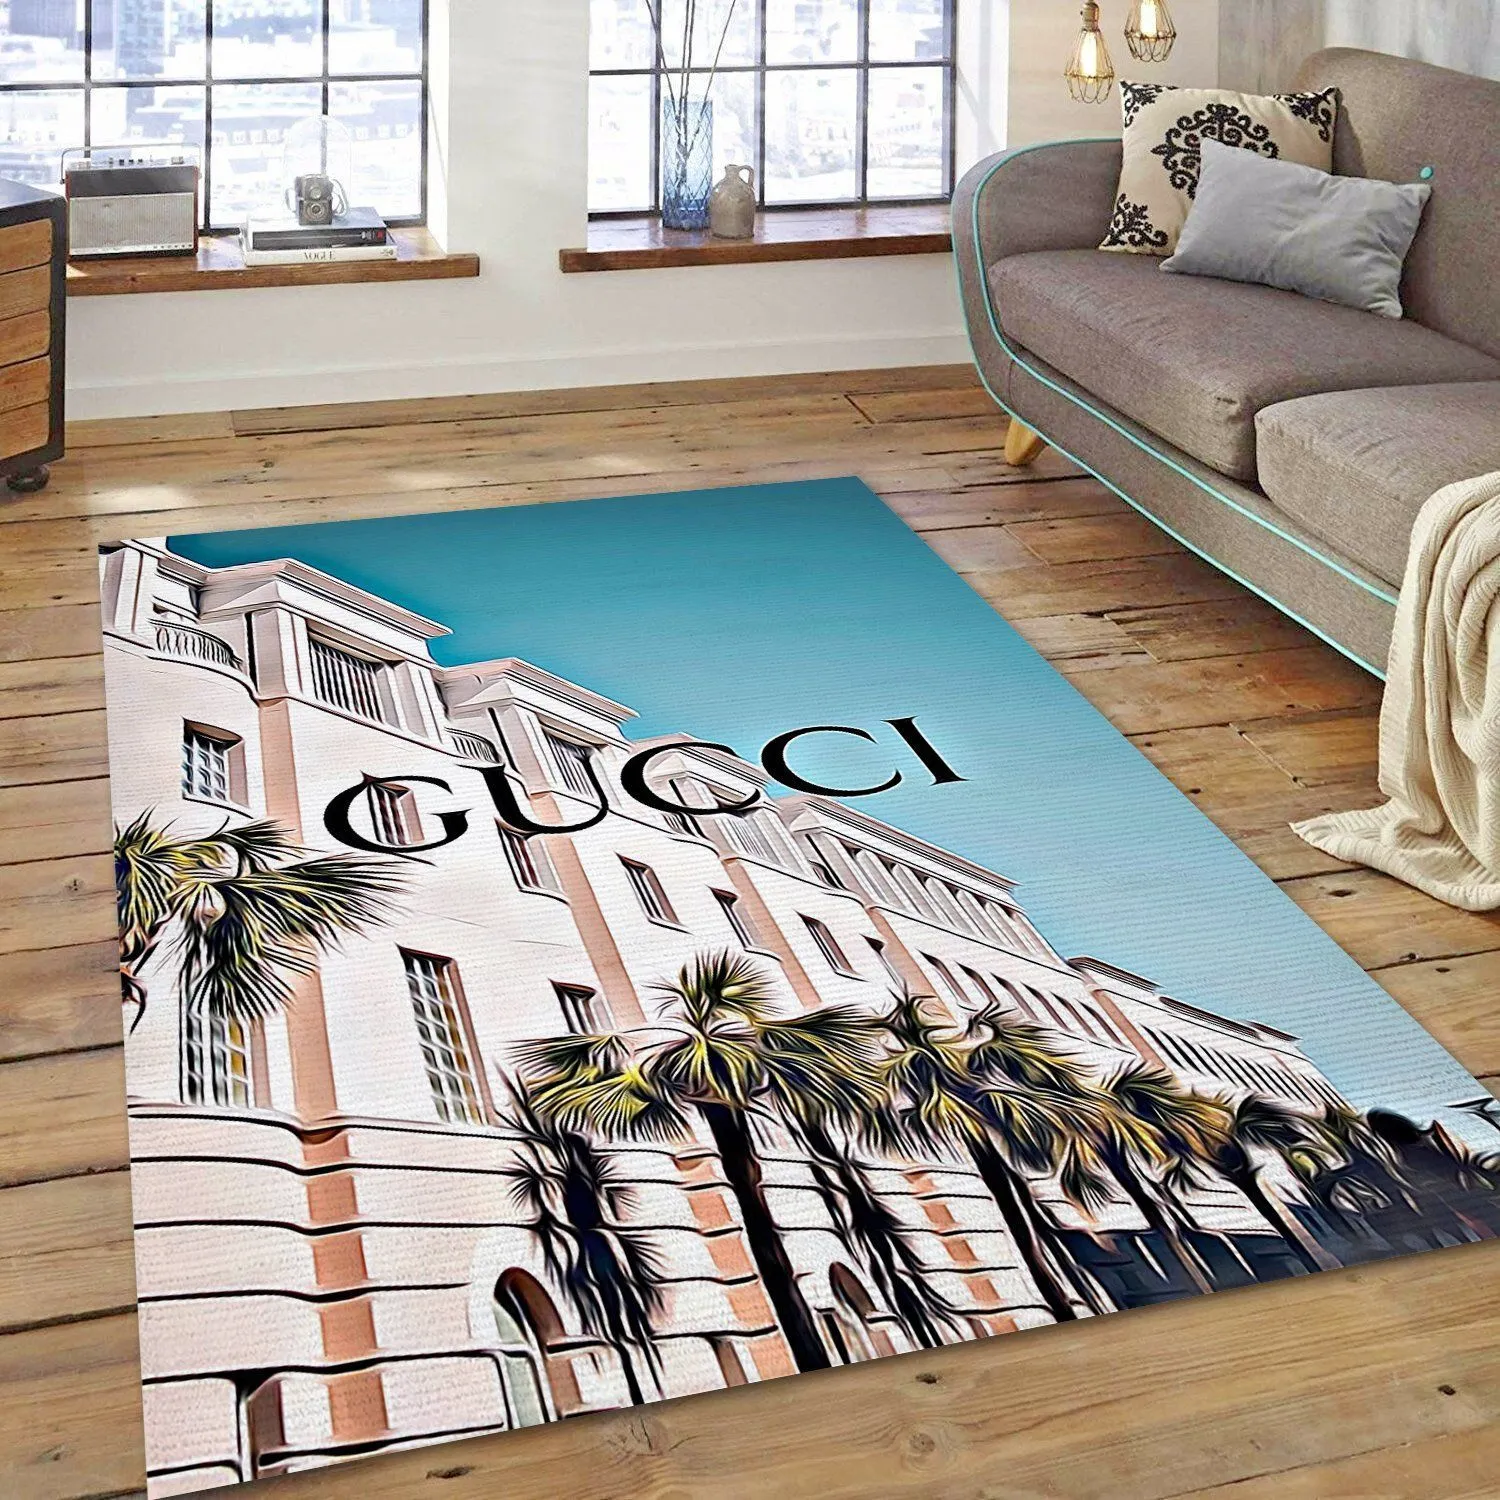 Gucci vintage Rectangle Rug Luxury Area Carpet Fashion Brand Home Decor Door Mat